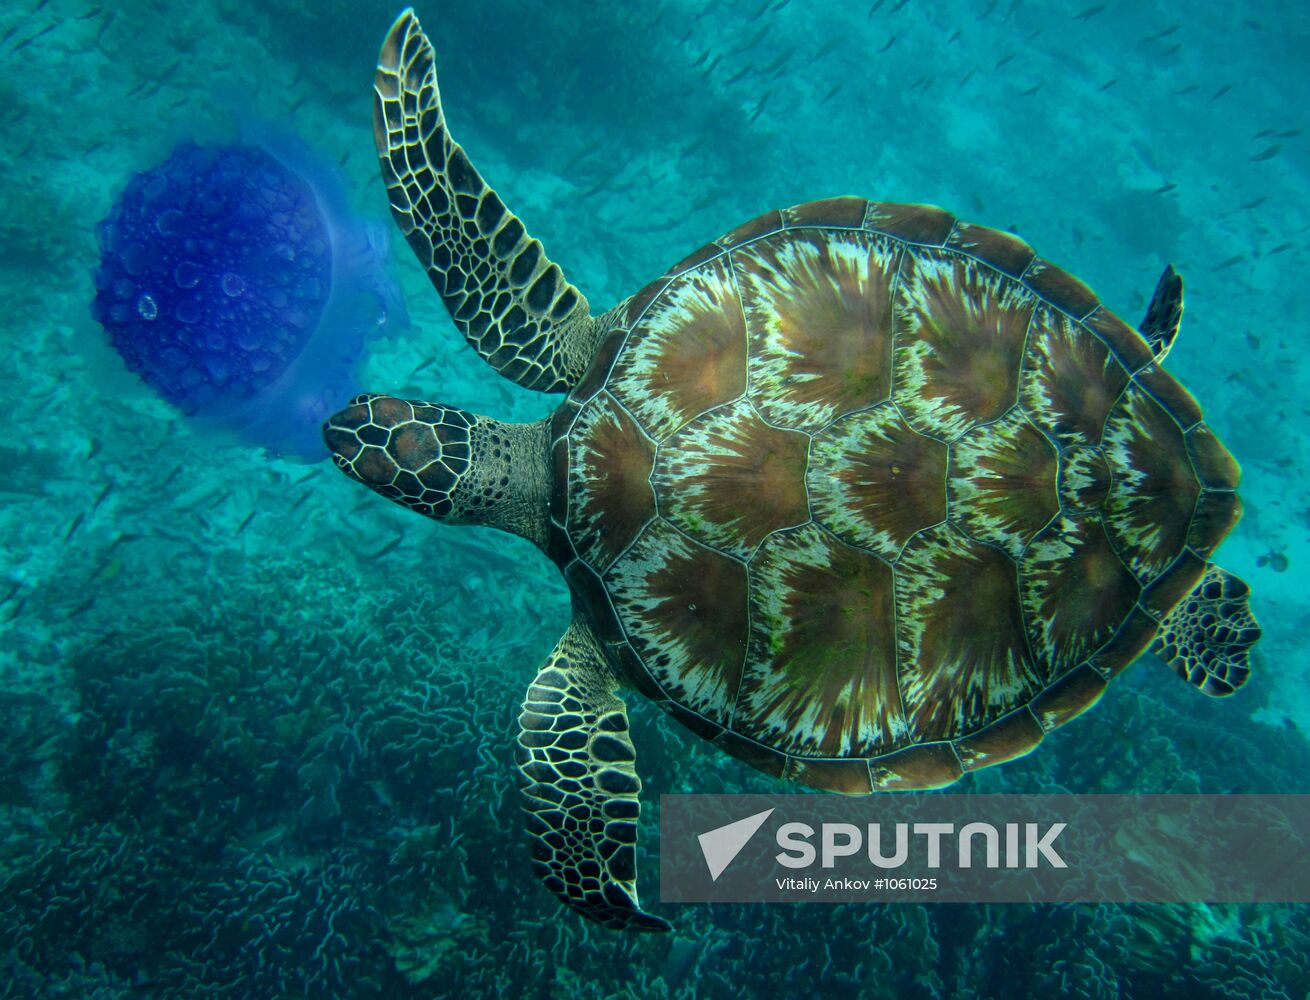 Marine turtles in the Andaman Sea off Similan islands